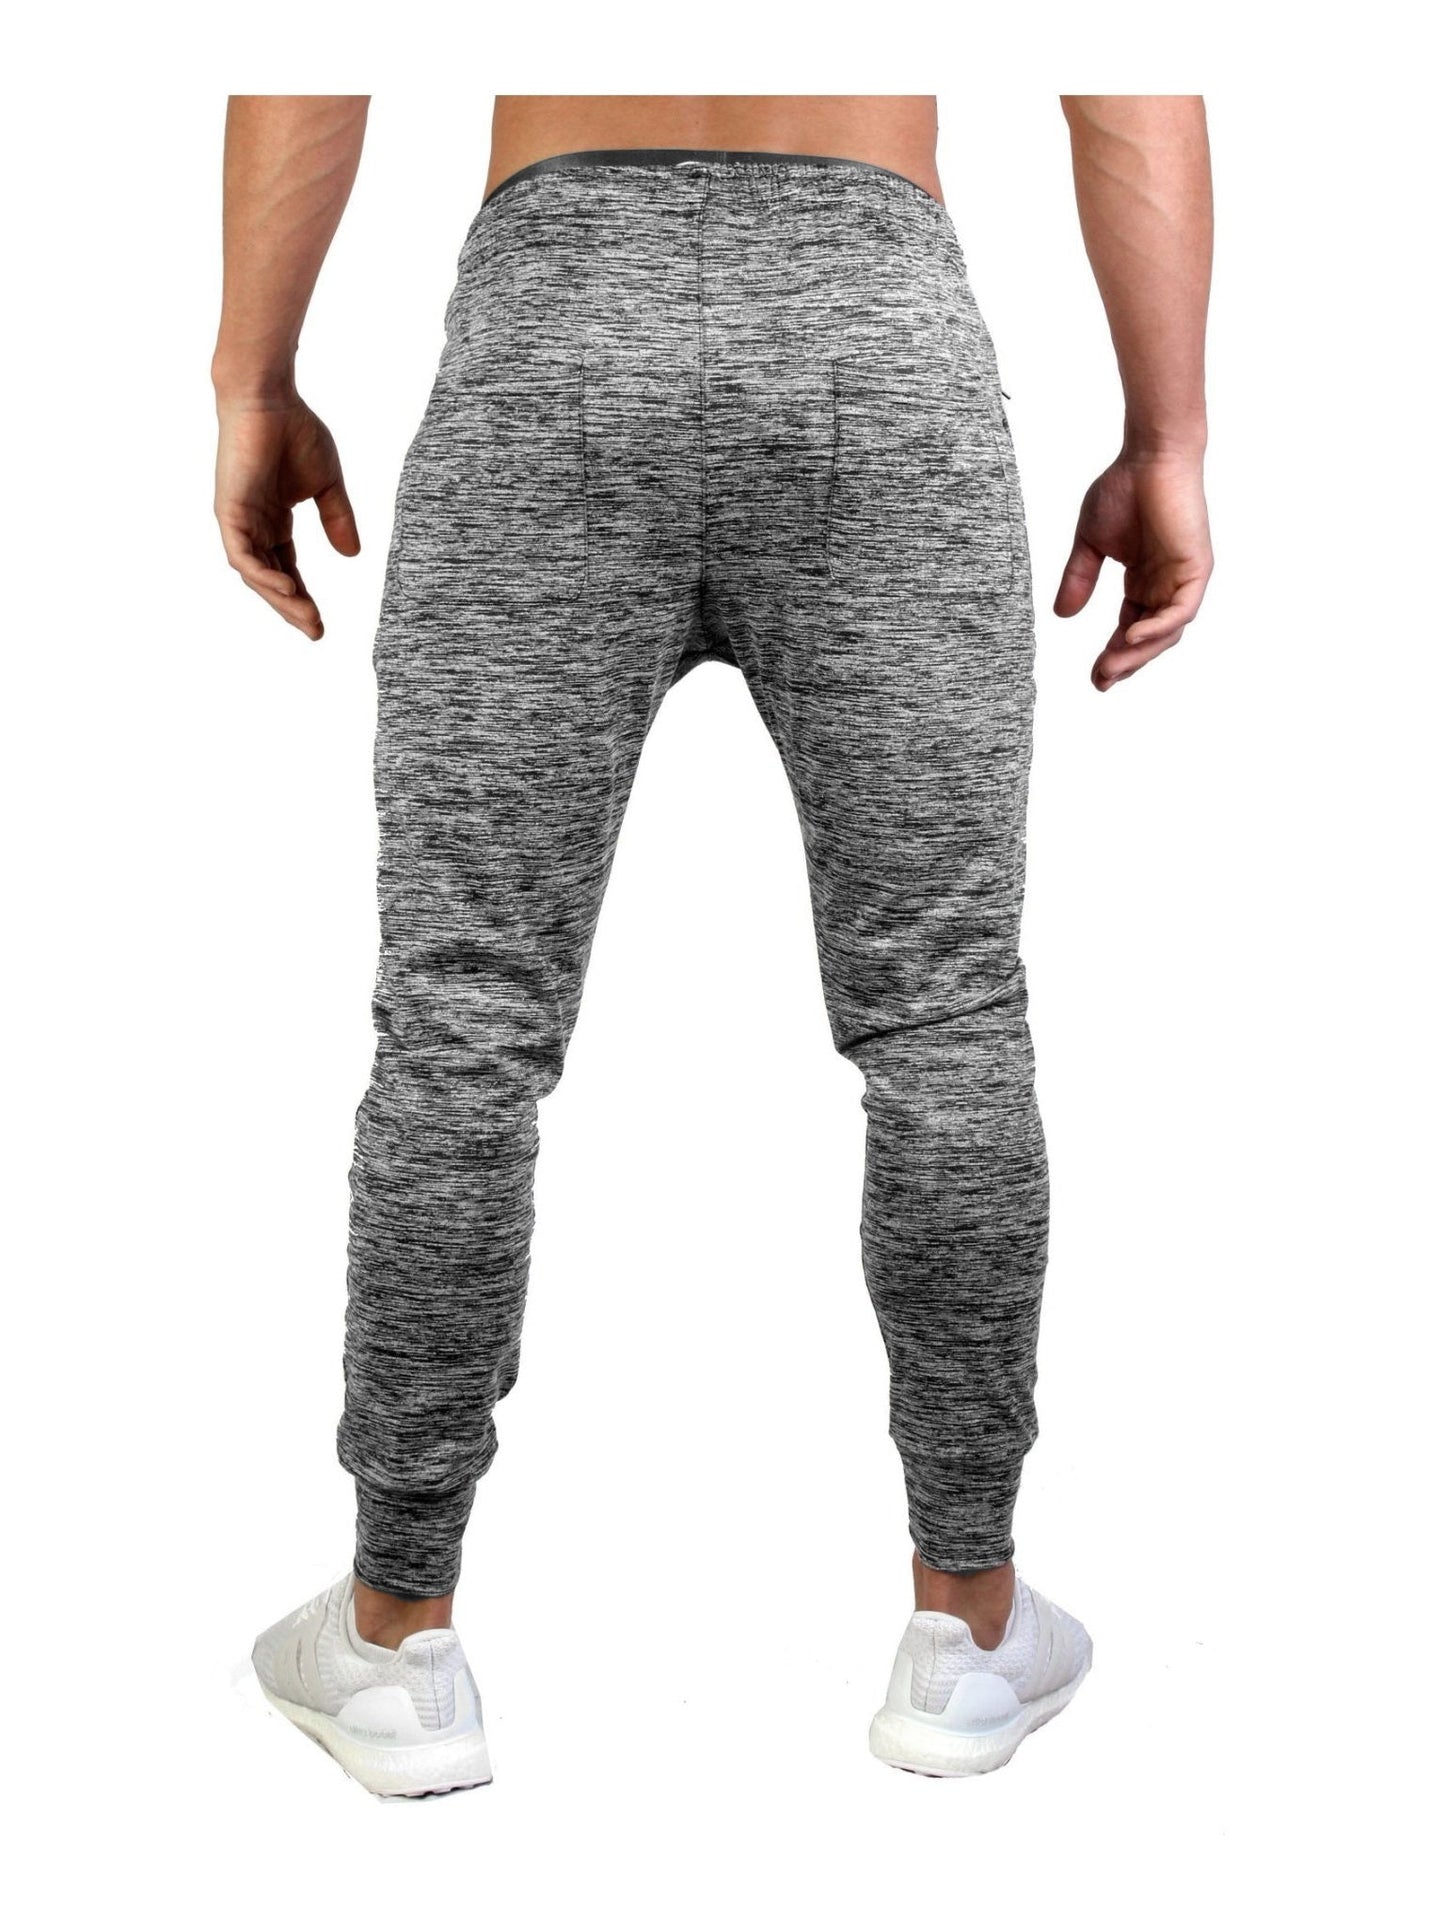 V8 Premium Fitness Pants - Cool Grey - Gym Generation®-7640171163079-www.gymgeneration.ch